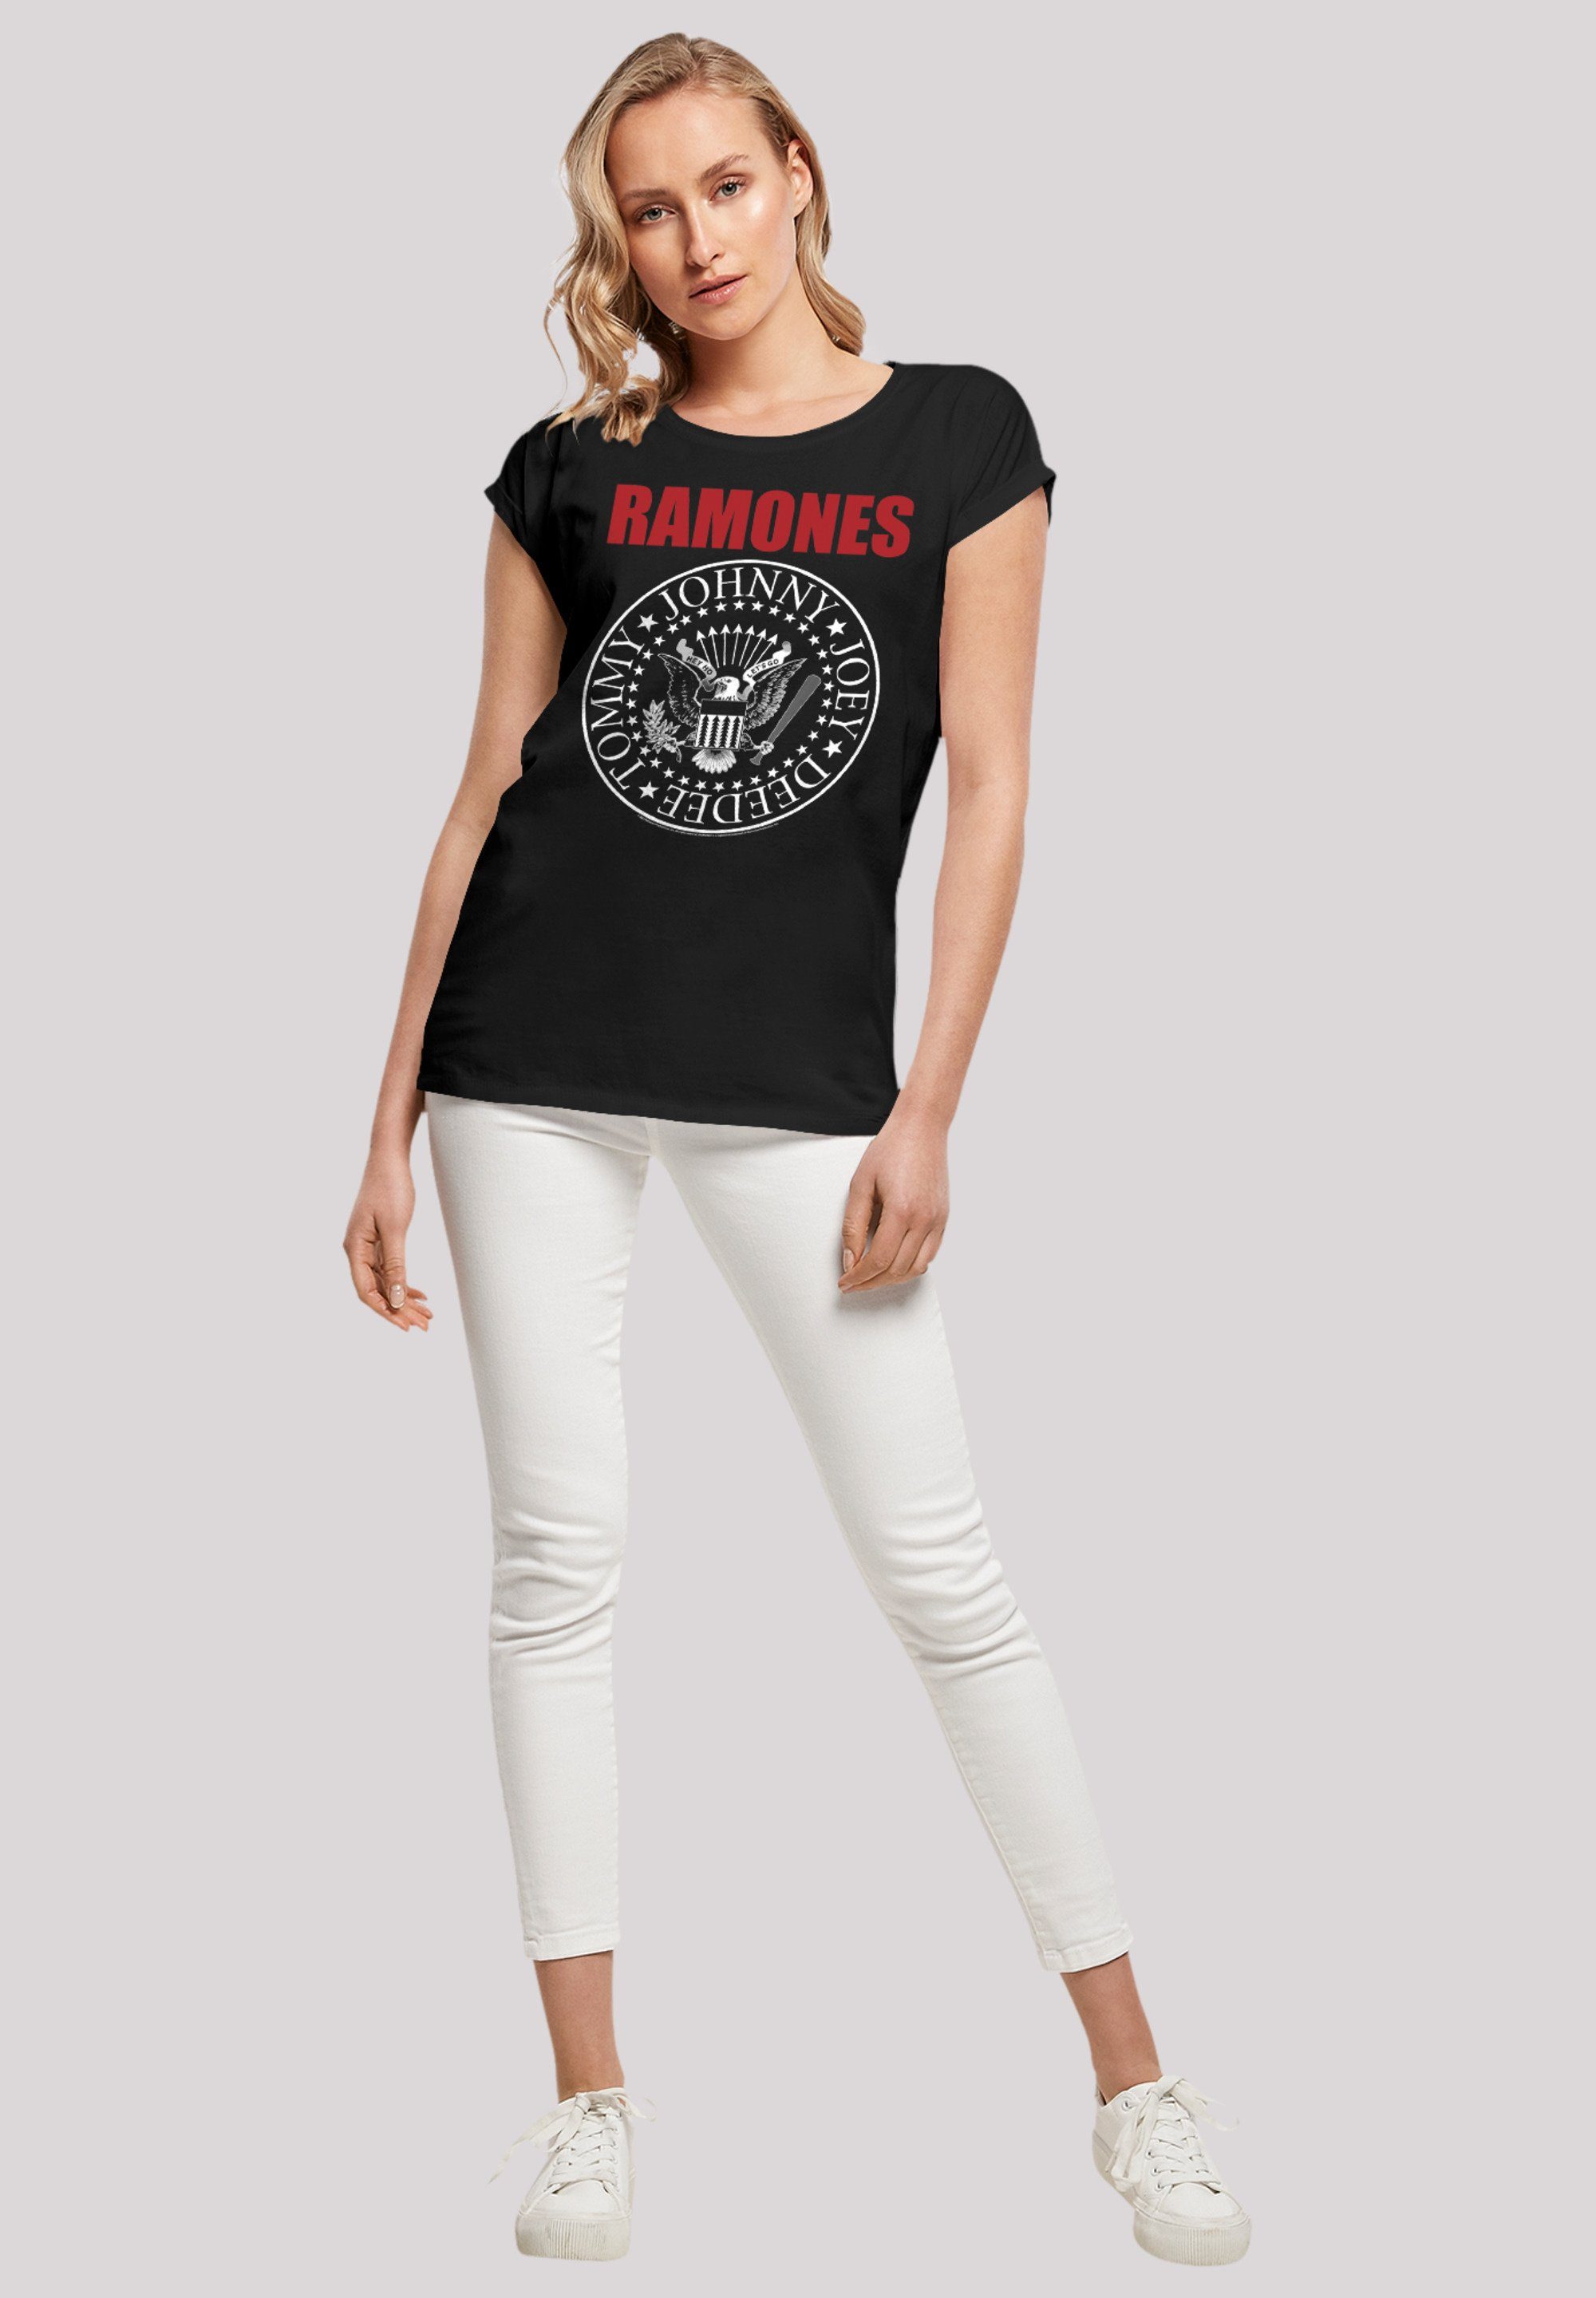 Text F4NT4STIC Seal Band, Musik Rock-Musik Red Rock Qualität, Ramones Premium Band T-Shirt